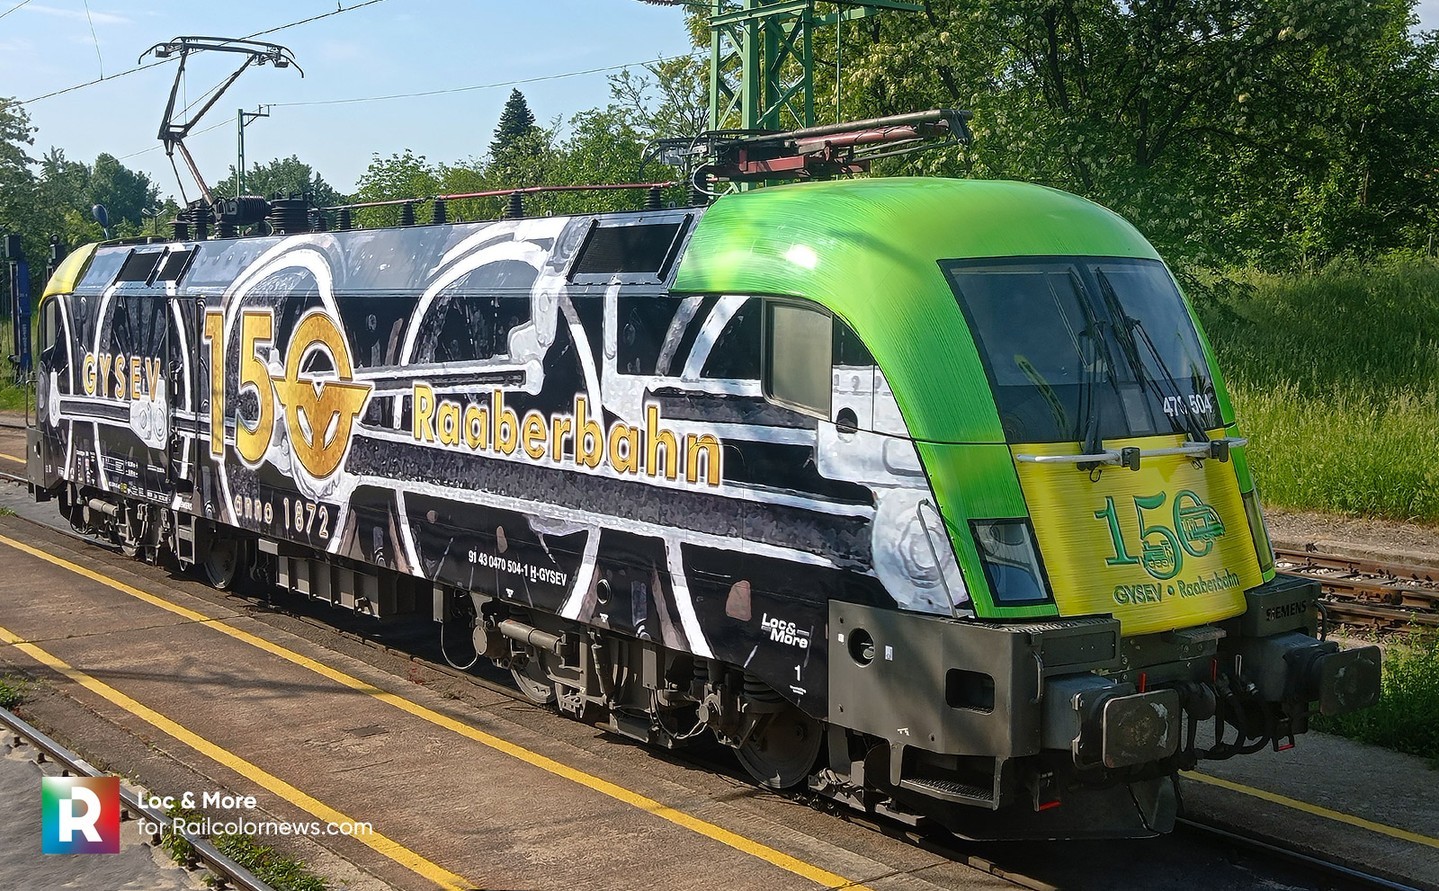 📷 by Stahl Csaba 🇭🇺 GYSEV 470 504 and the 150th anniversary of its owner ⬆️
.
.
.
.
.
#GySev #Raaberbahn #150years #Siemens#ES64U2 #SiemensES64U2 #470504 #ellok #electriclocomotive #railways #railways_of_europe #eisenbahnfotografie #railwayphotography #railcolornews #vasút #trains #trains #rollinstock #hungary #vonatok #sopron #vasútfotó #vonat #trainhungary #trainsinhungary #150 #SiemensES64U2GySEV